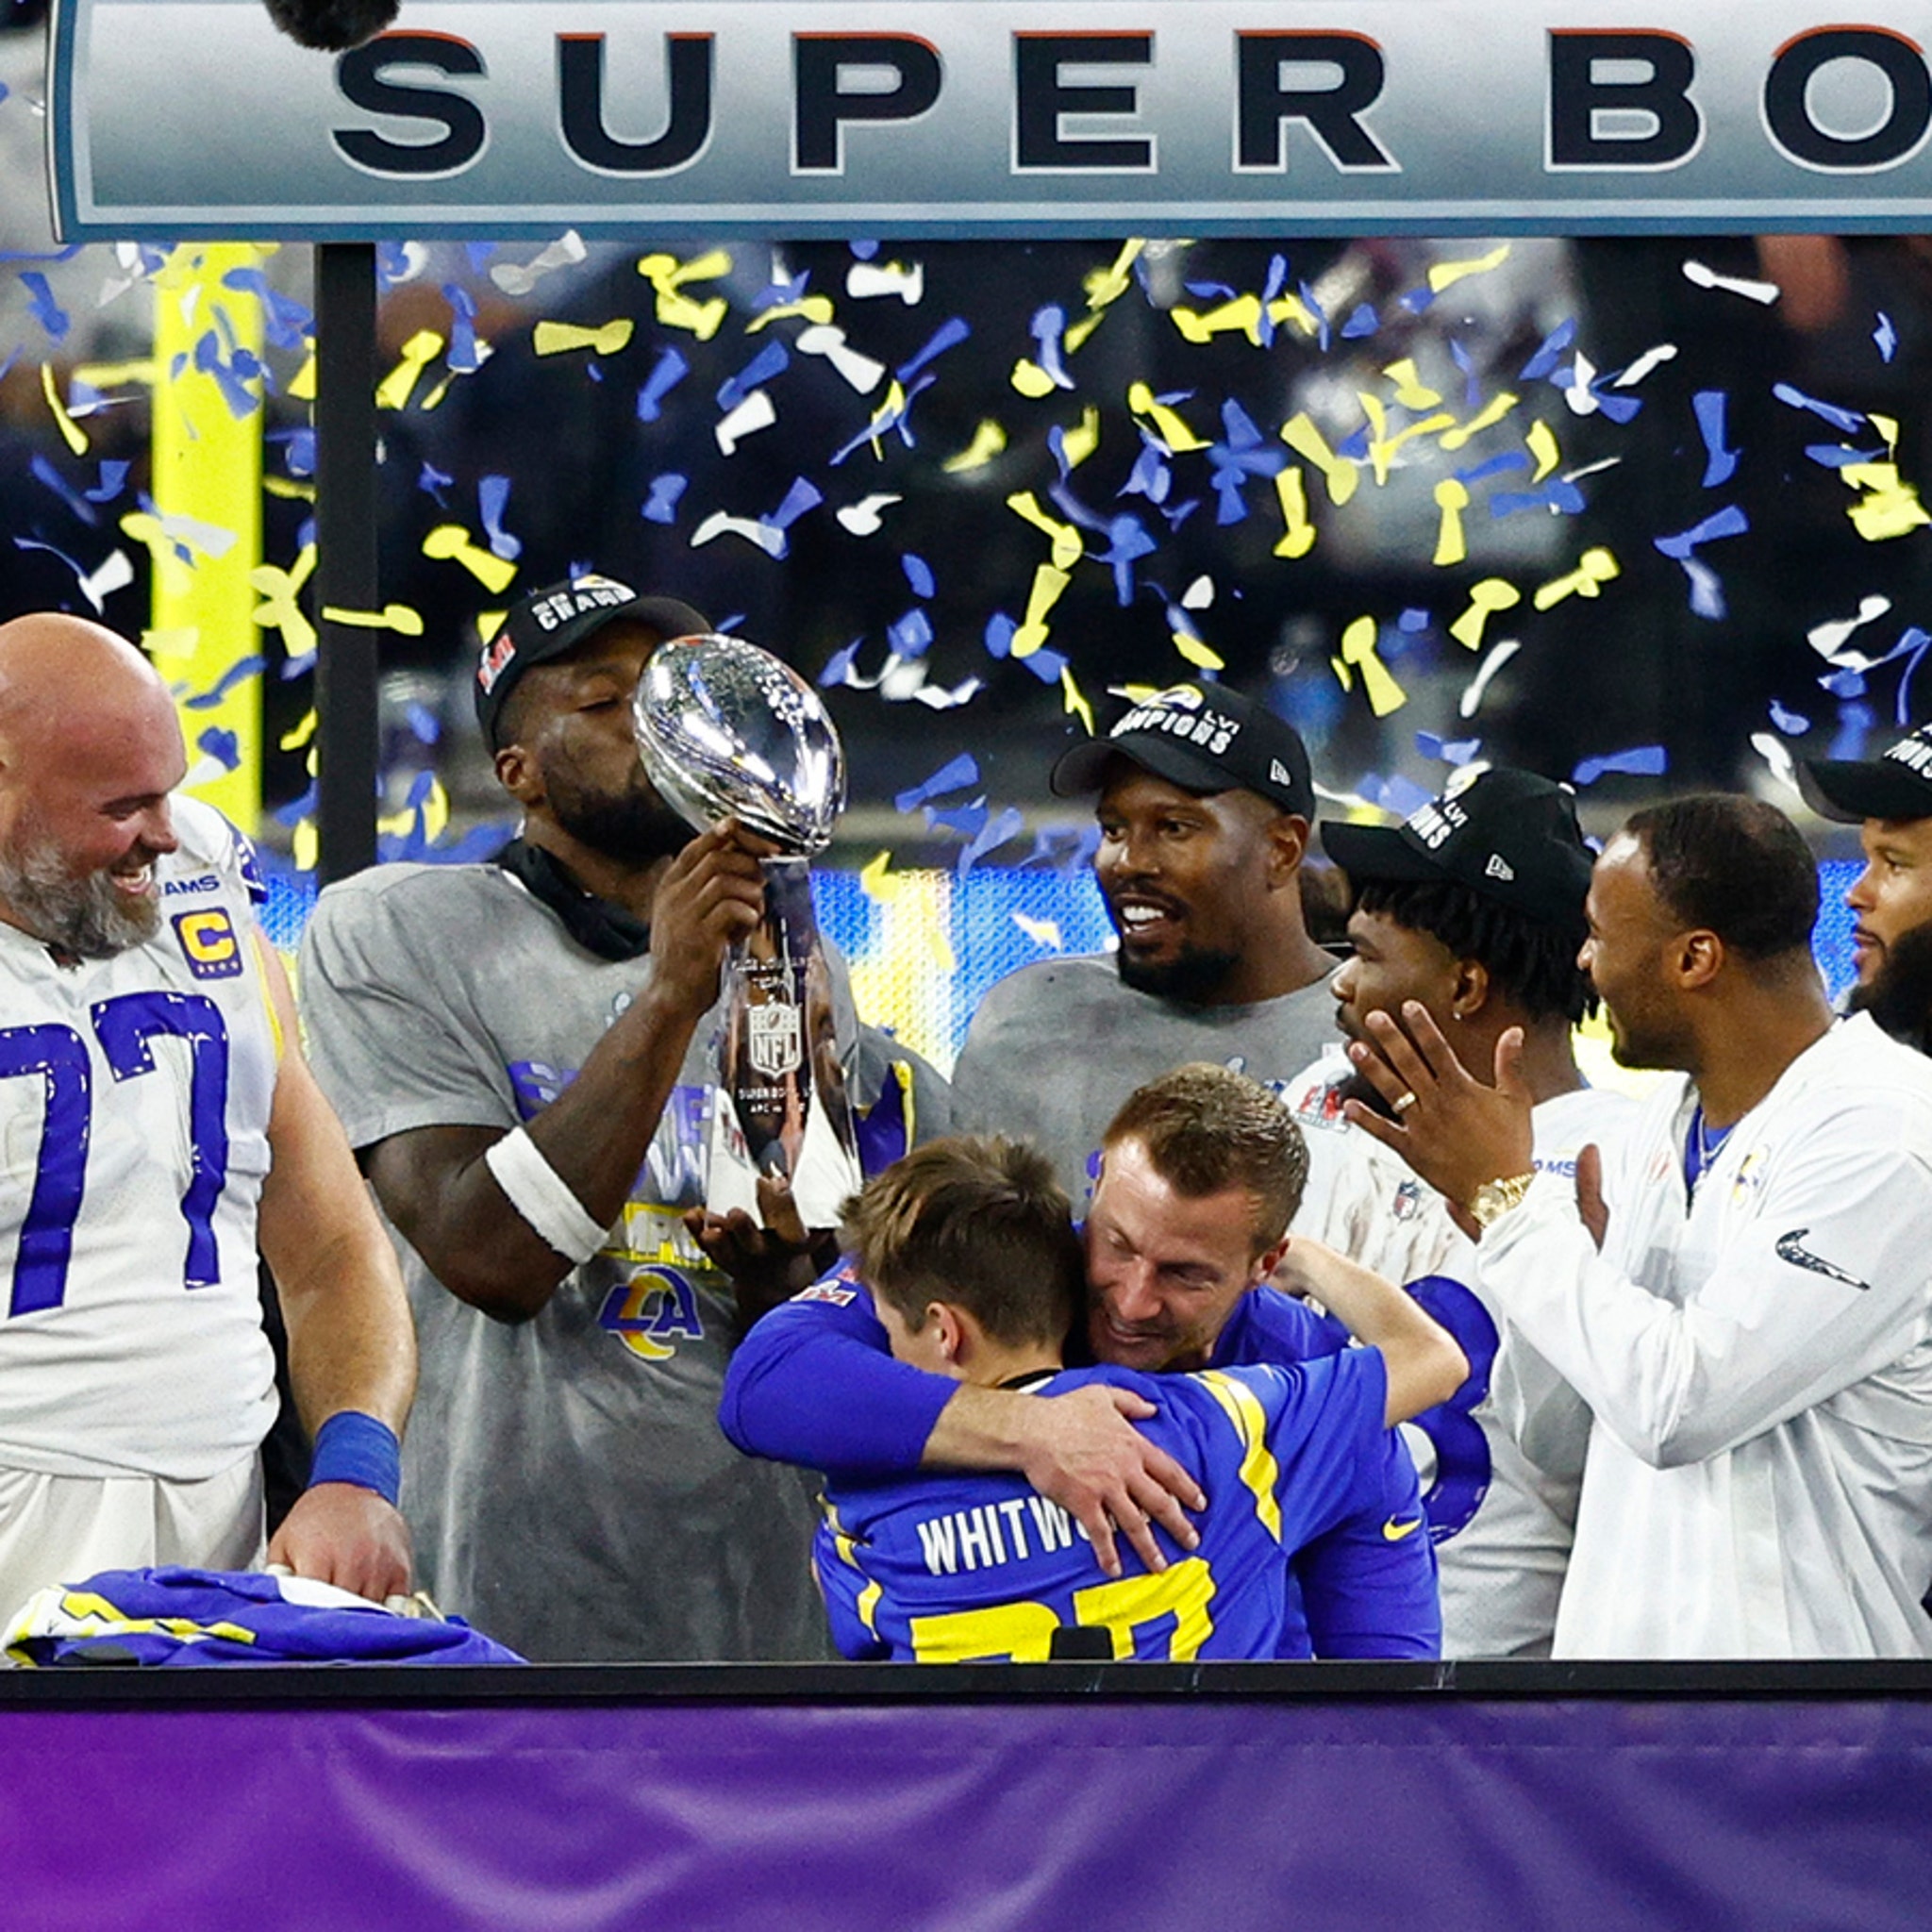 LA Rams celebrate Super Bowl win with Las Vegas bash